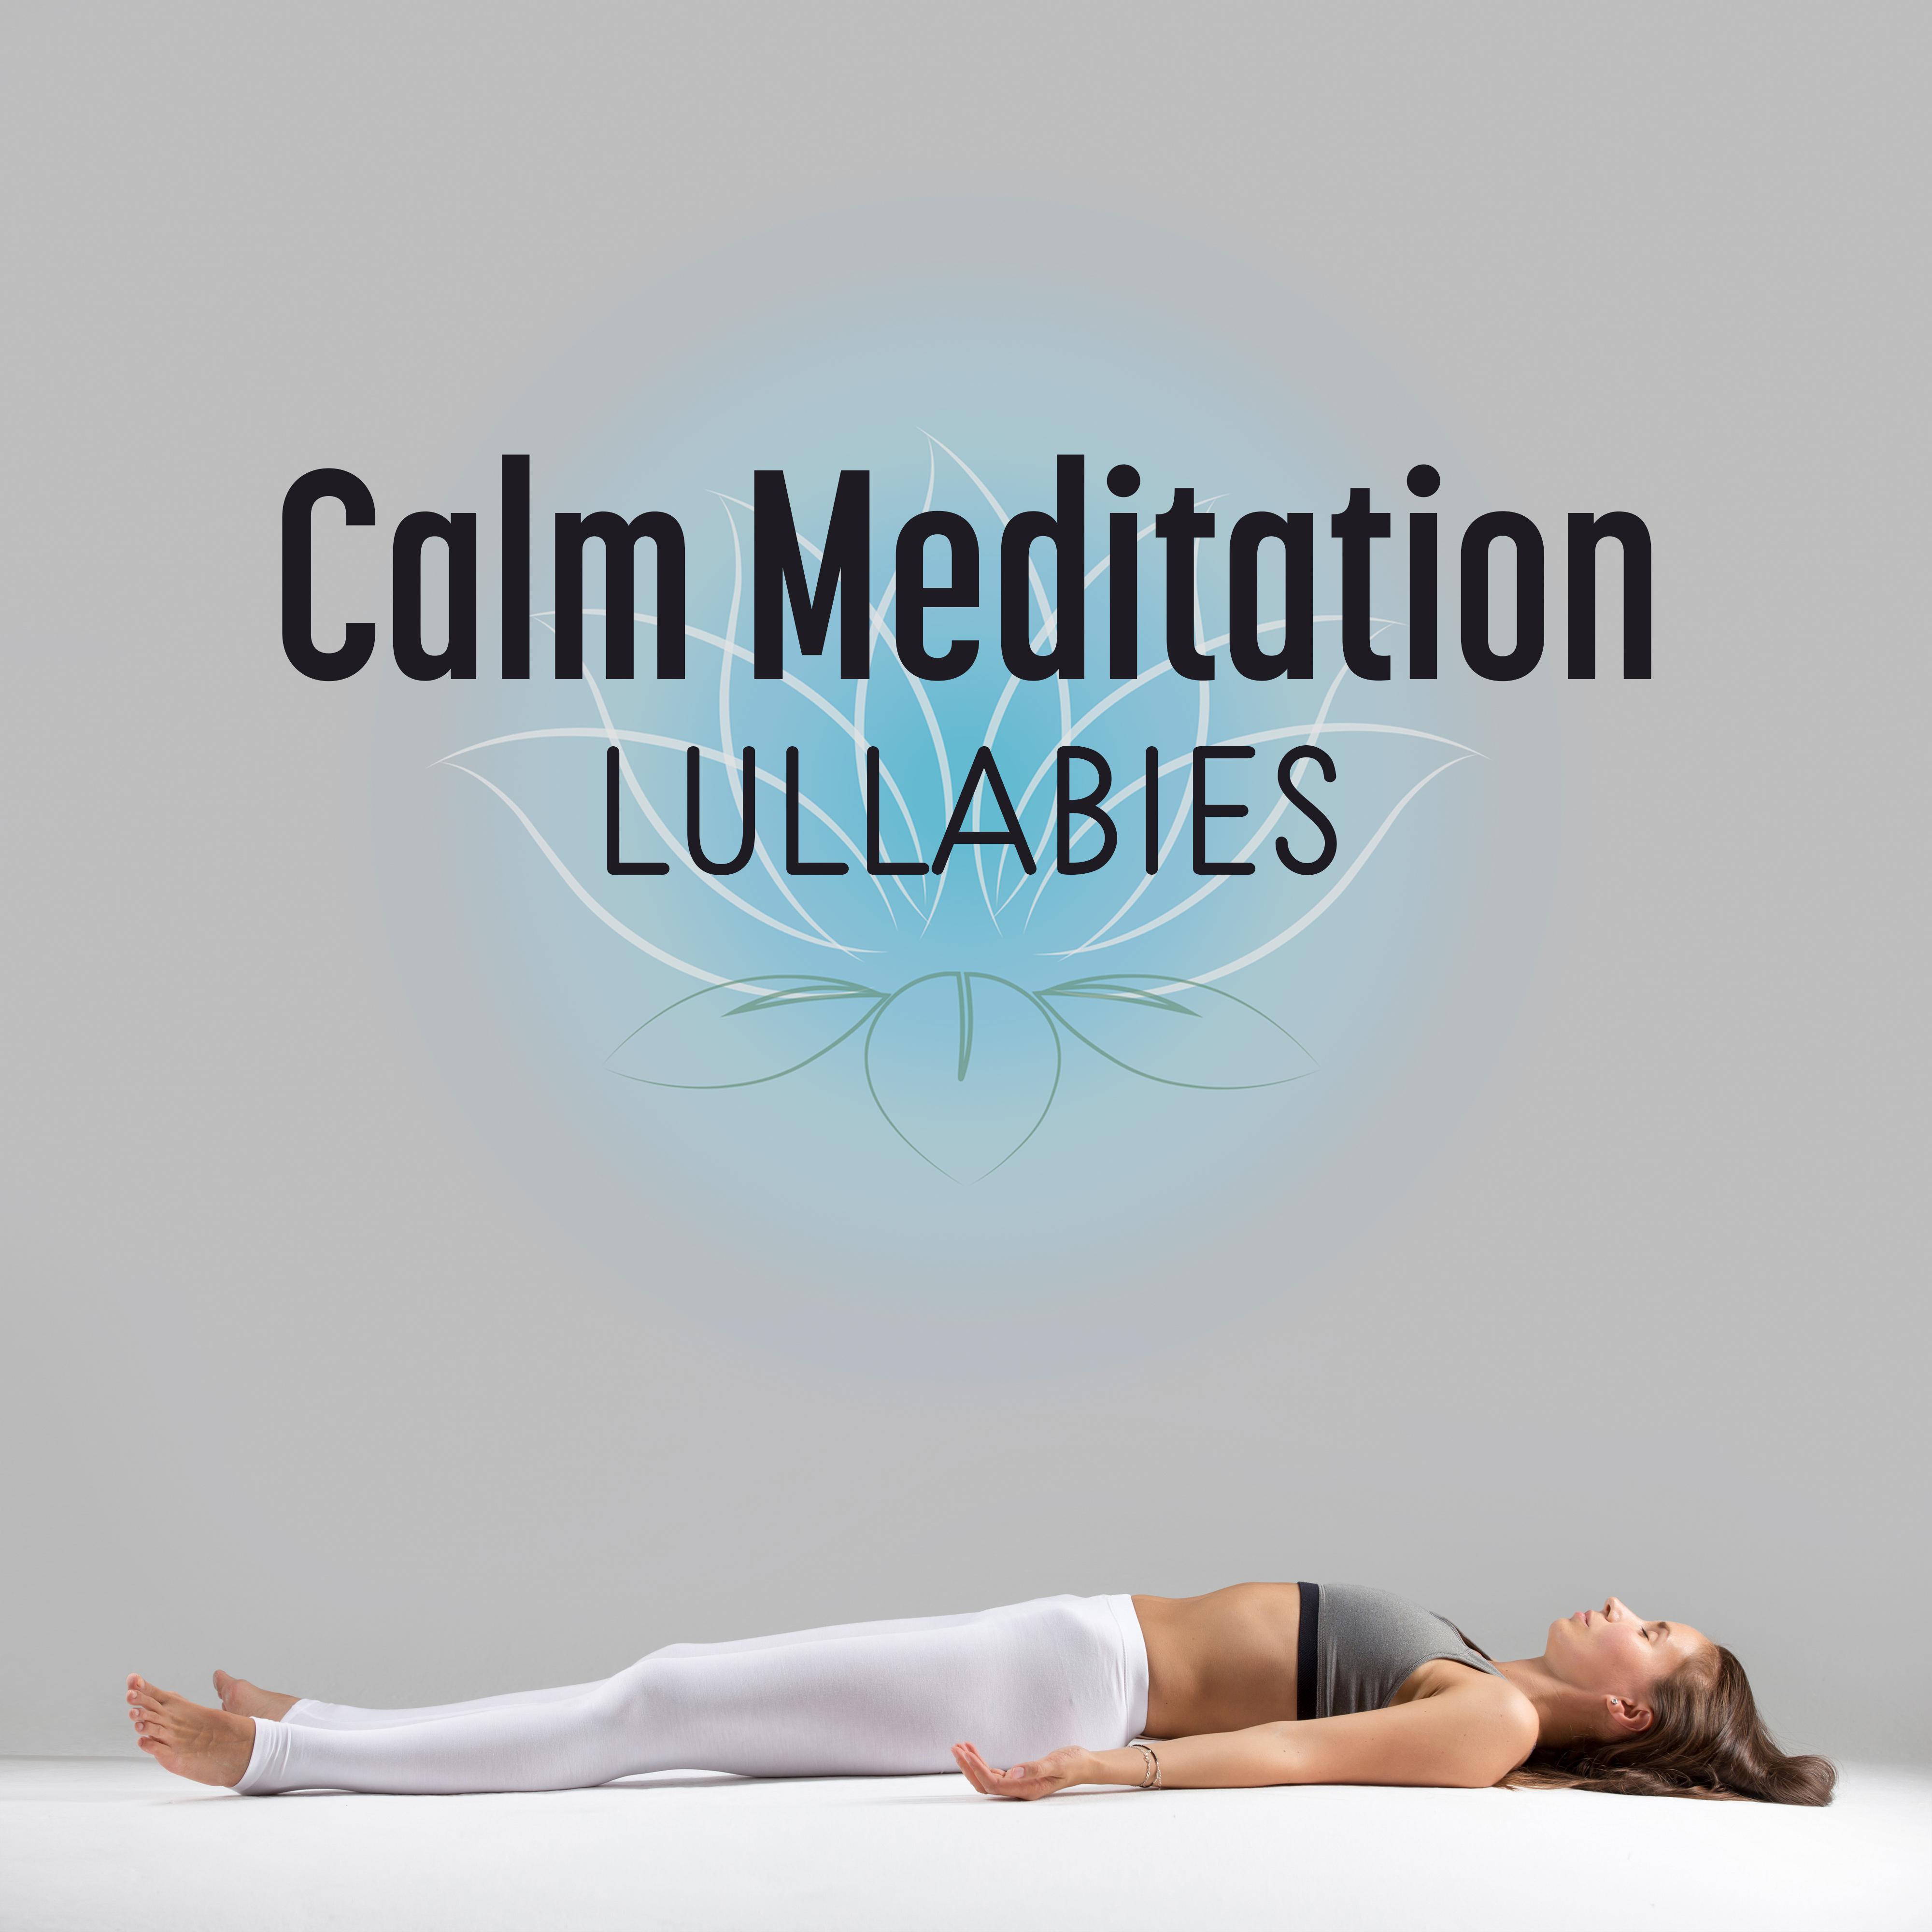 Calm Meditation Lullabies